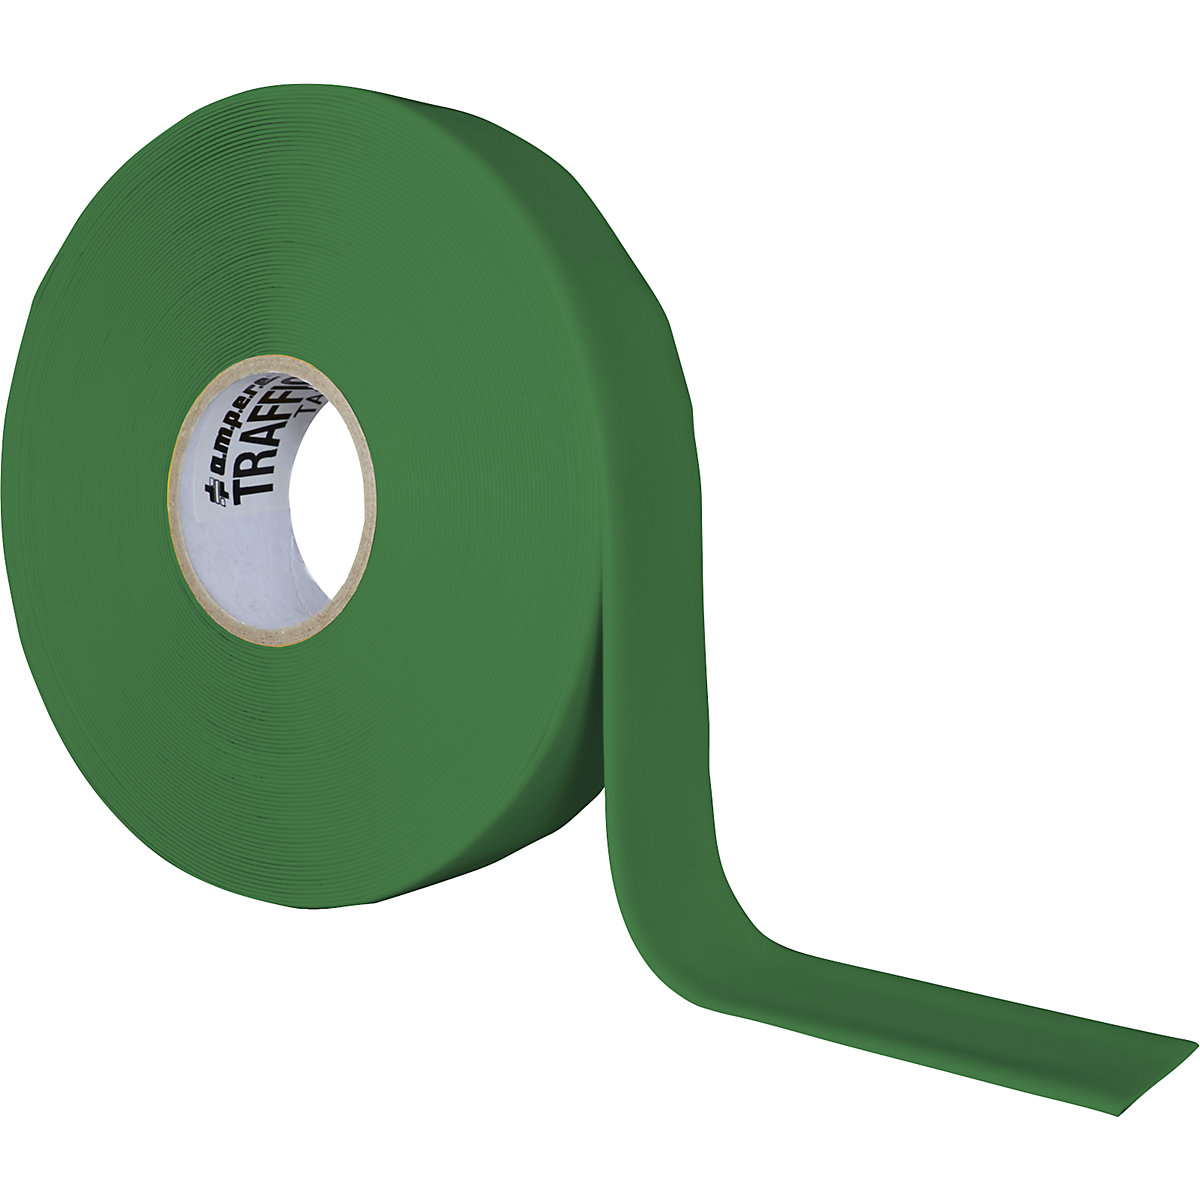 Vloermarkeringstape, extra sterk – Ampere, breedte 50 mm, groen-5